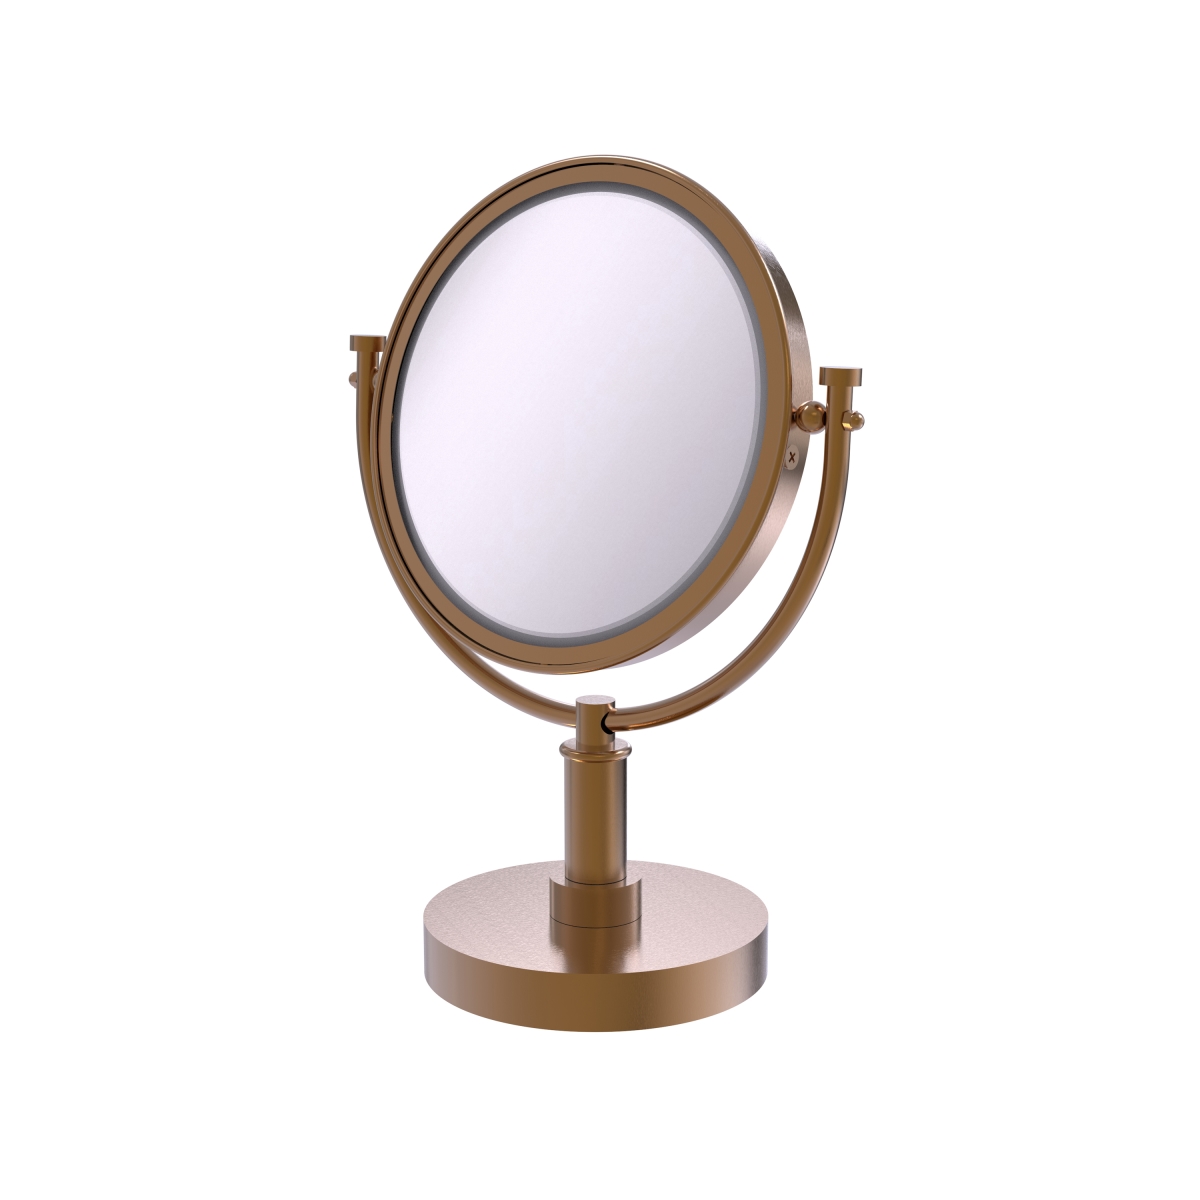 Dm-4-2x-bbr 8 In. Vanity Top Make-up Mirror 2x Magnification, Brushed Bronze